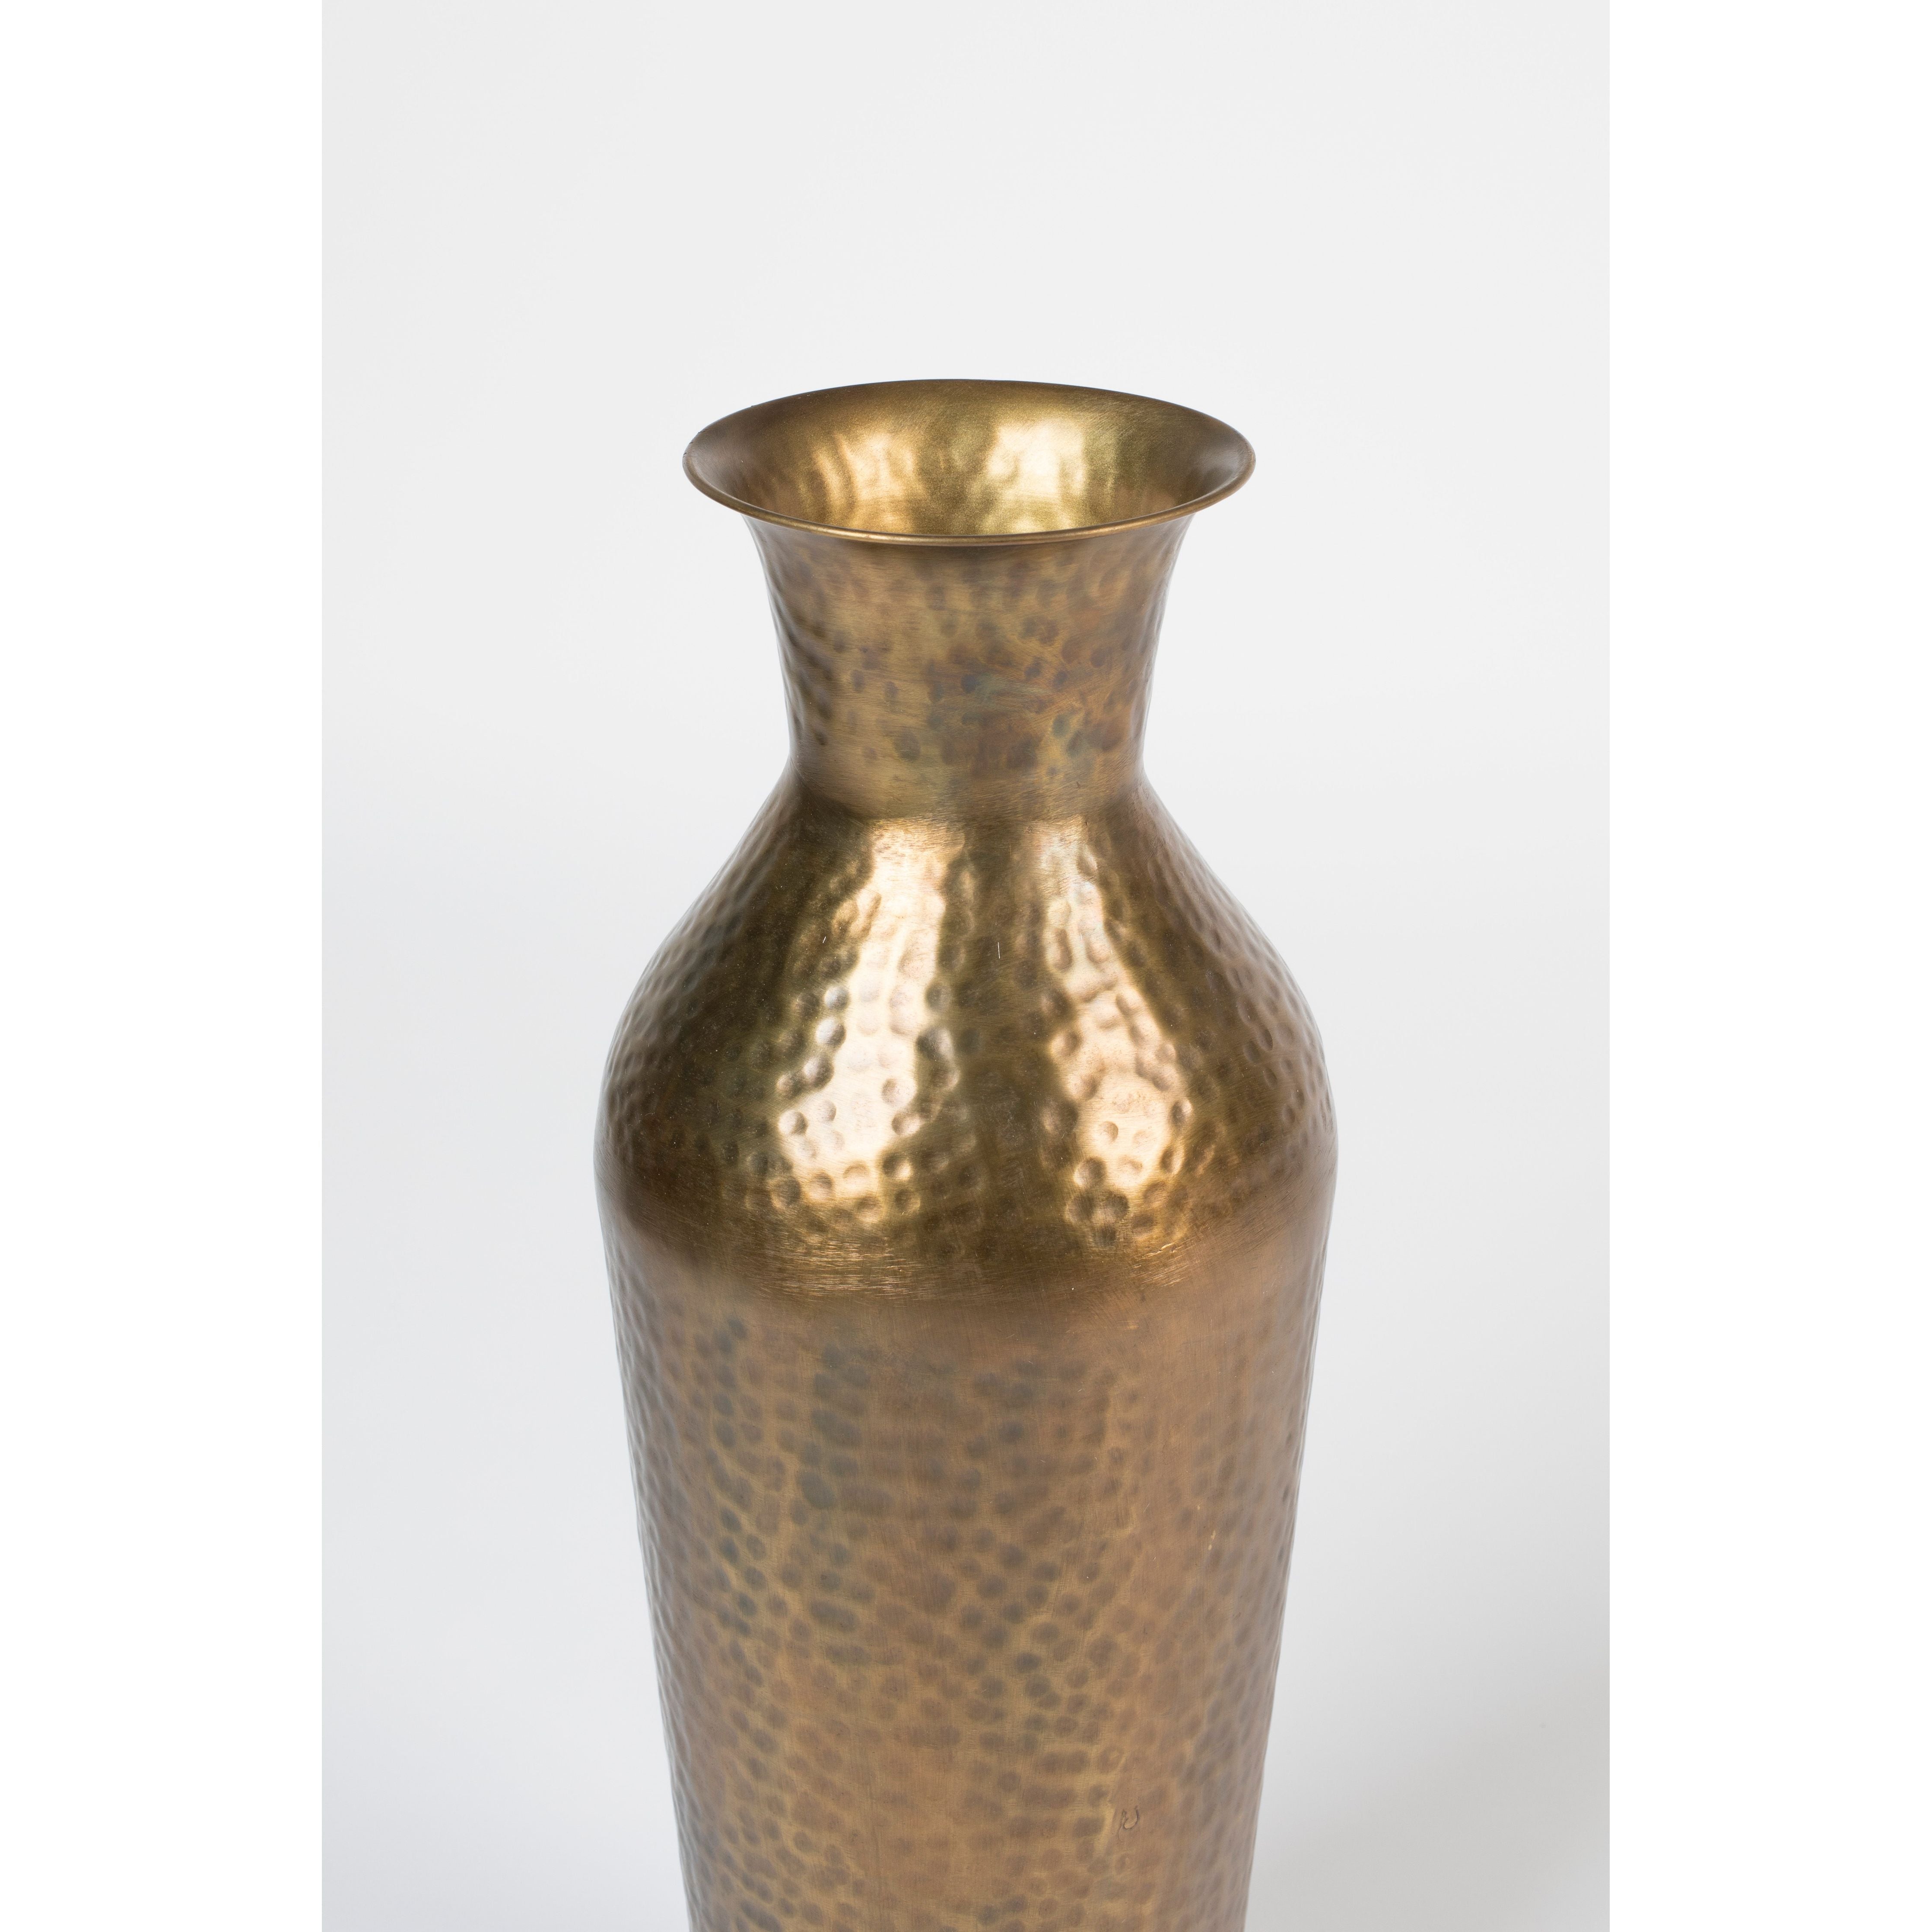 Vase dunja antique brass m